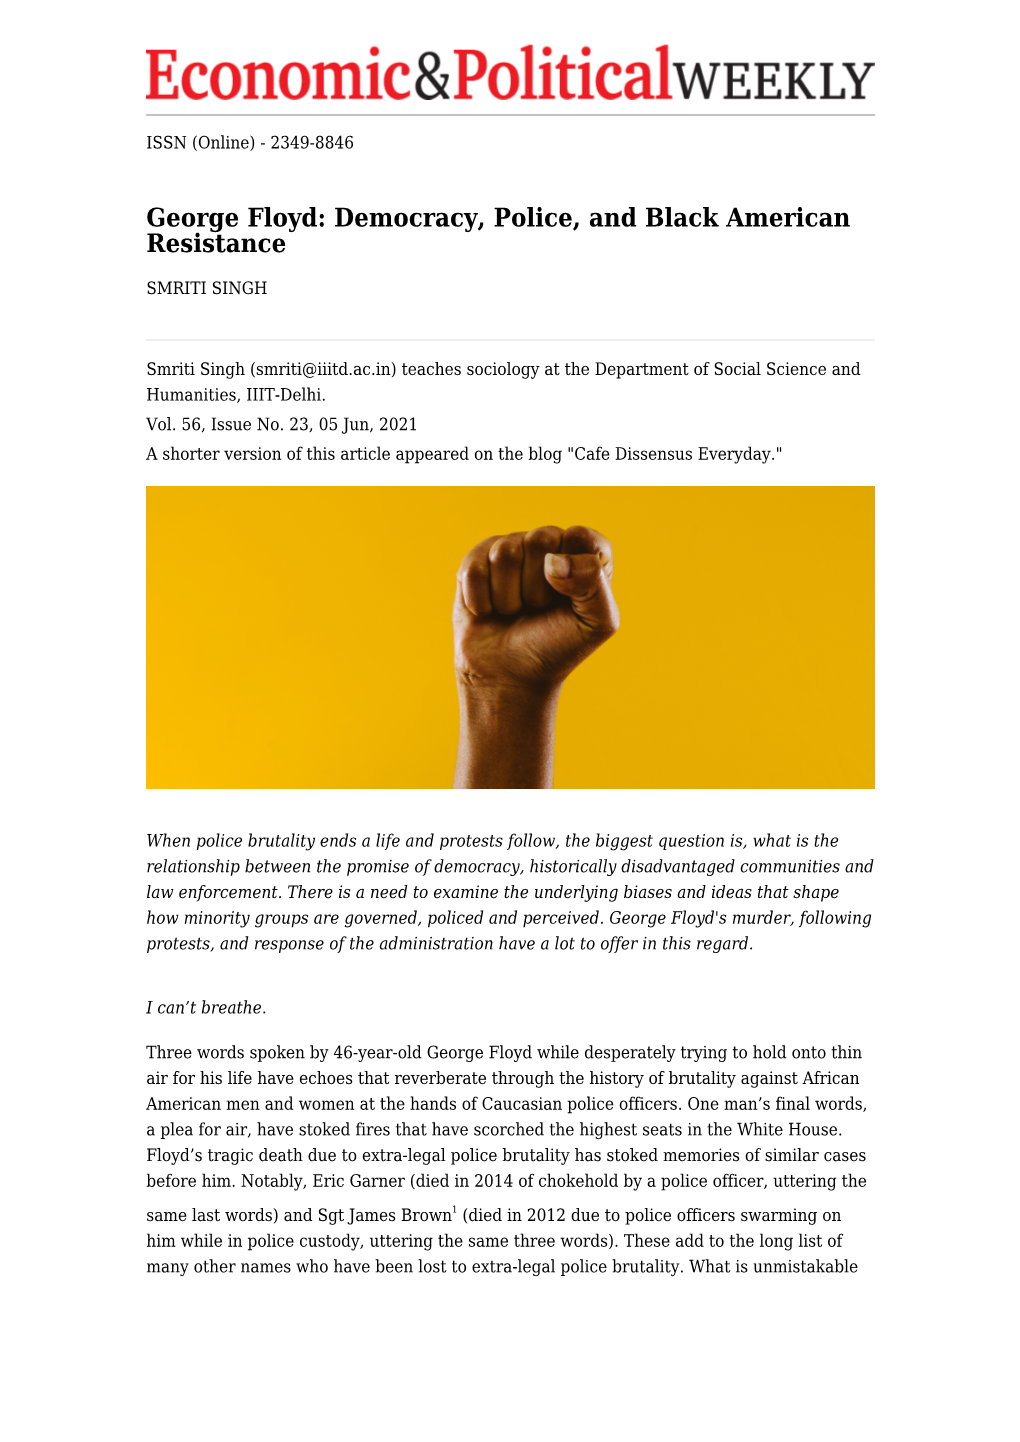 George Floyd: Democracy, Police, and Black American Resistance